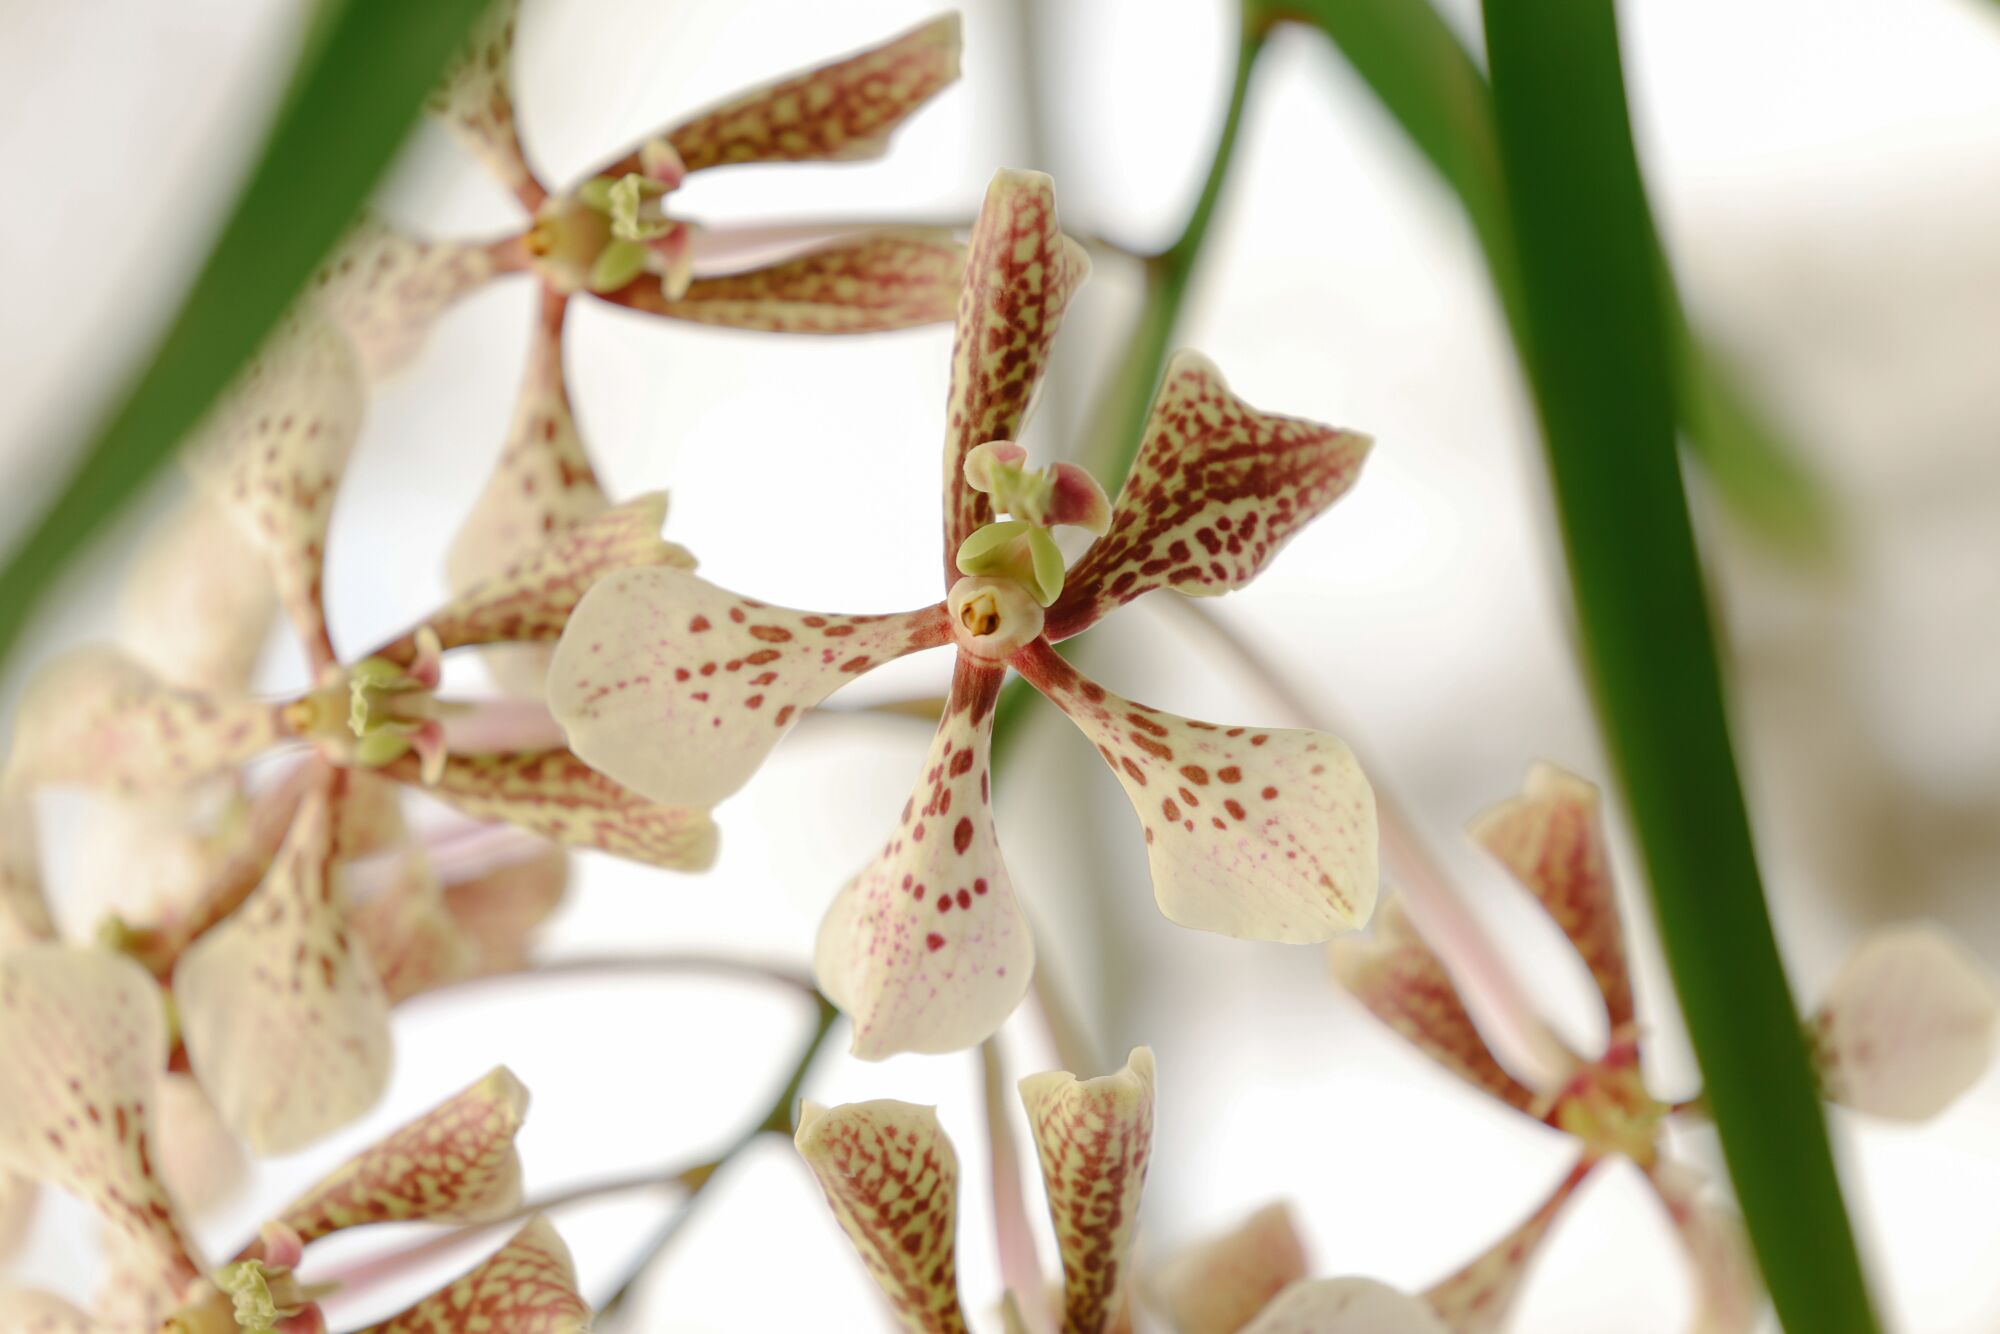 The flower of a white Vanda Ellen Noa orchid 